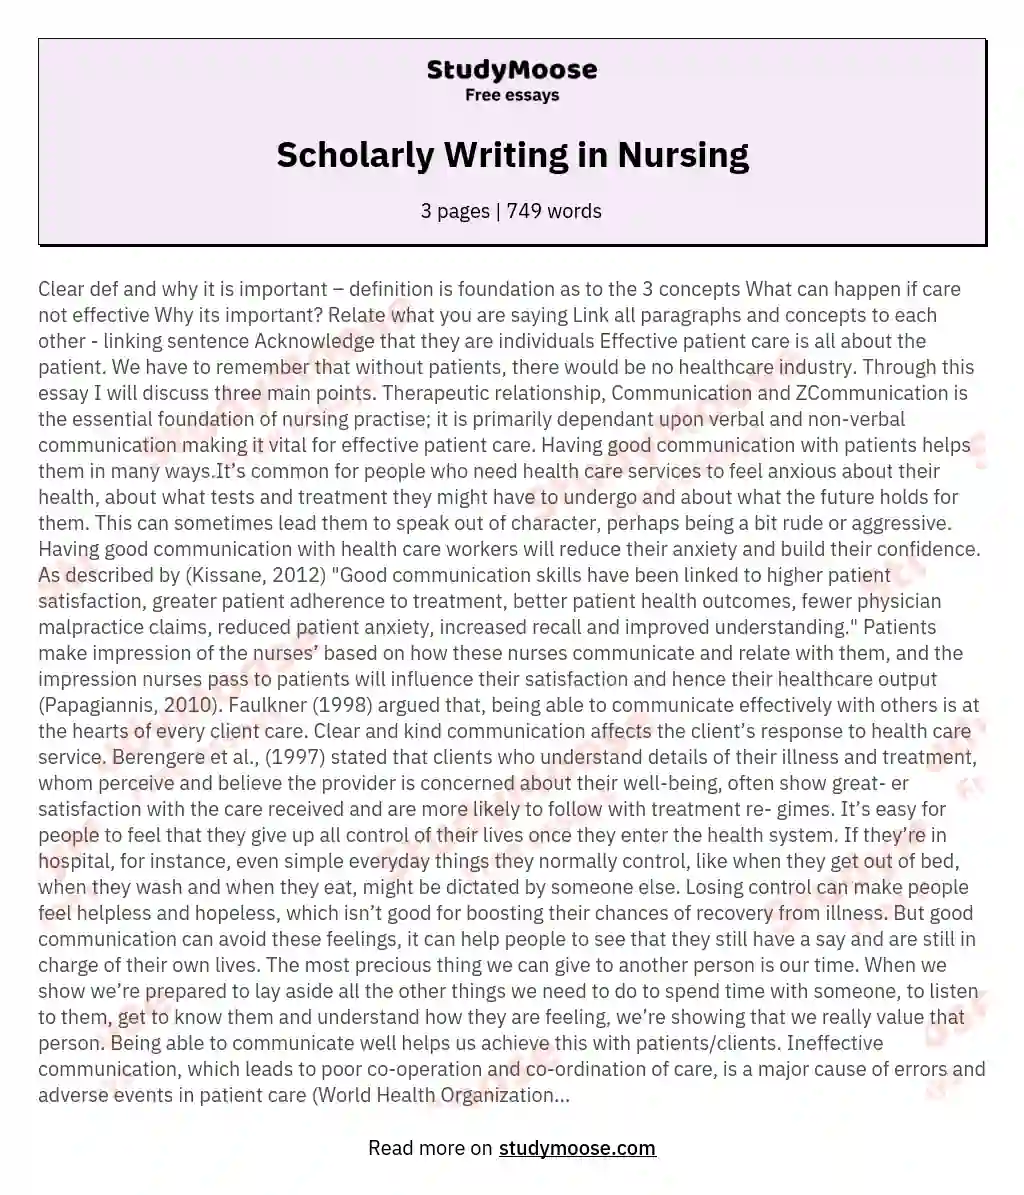 Scholarly Writing in Nursing essay